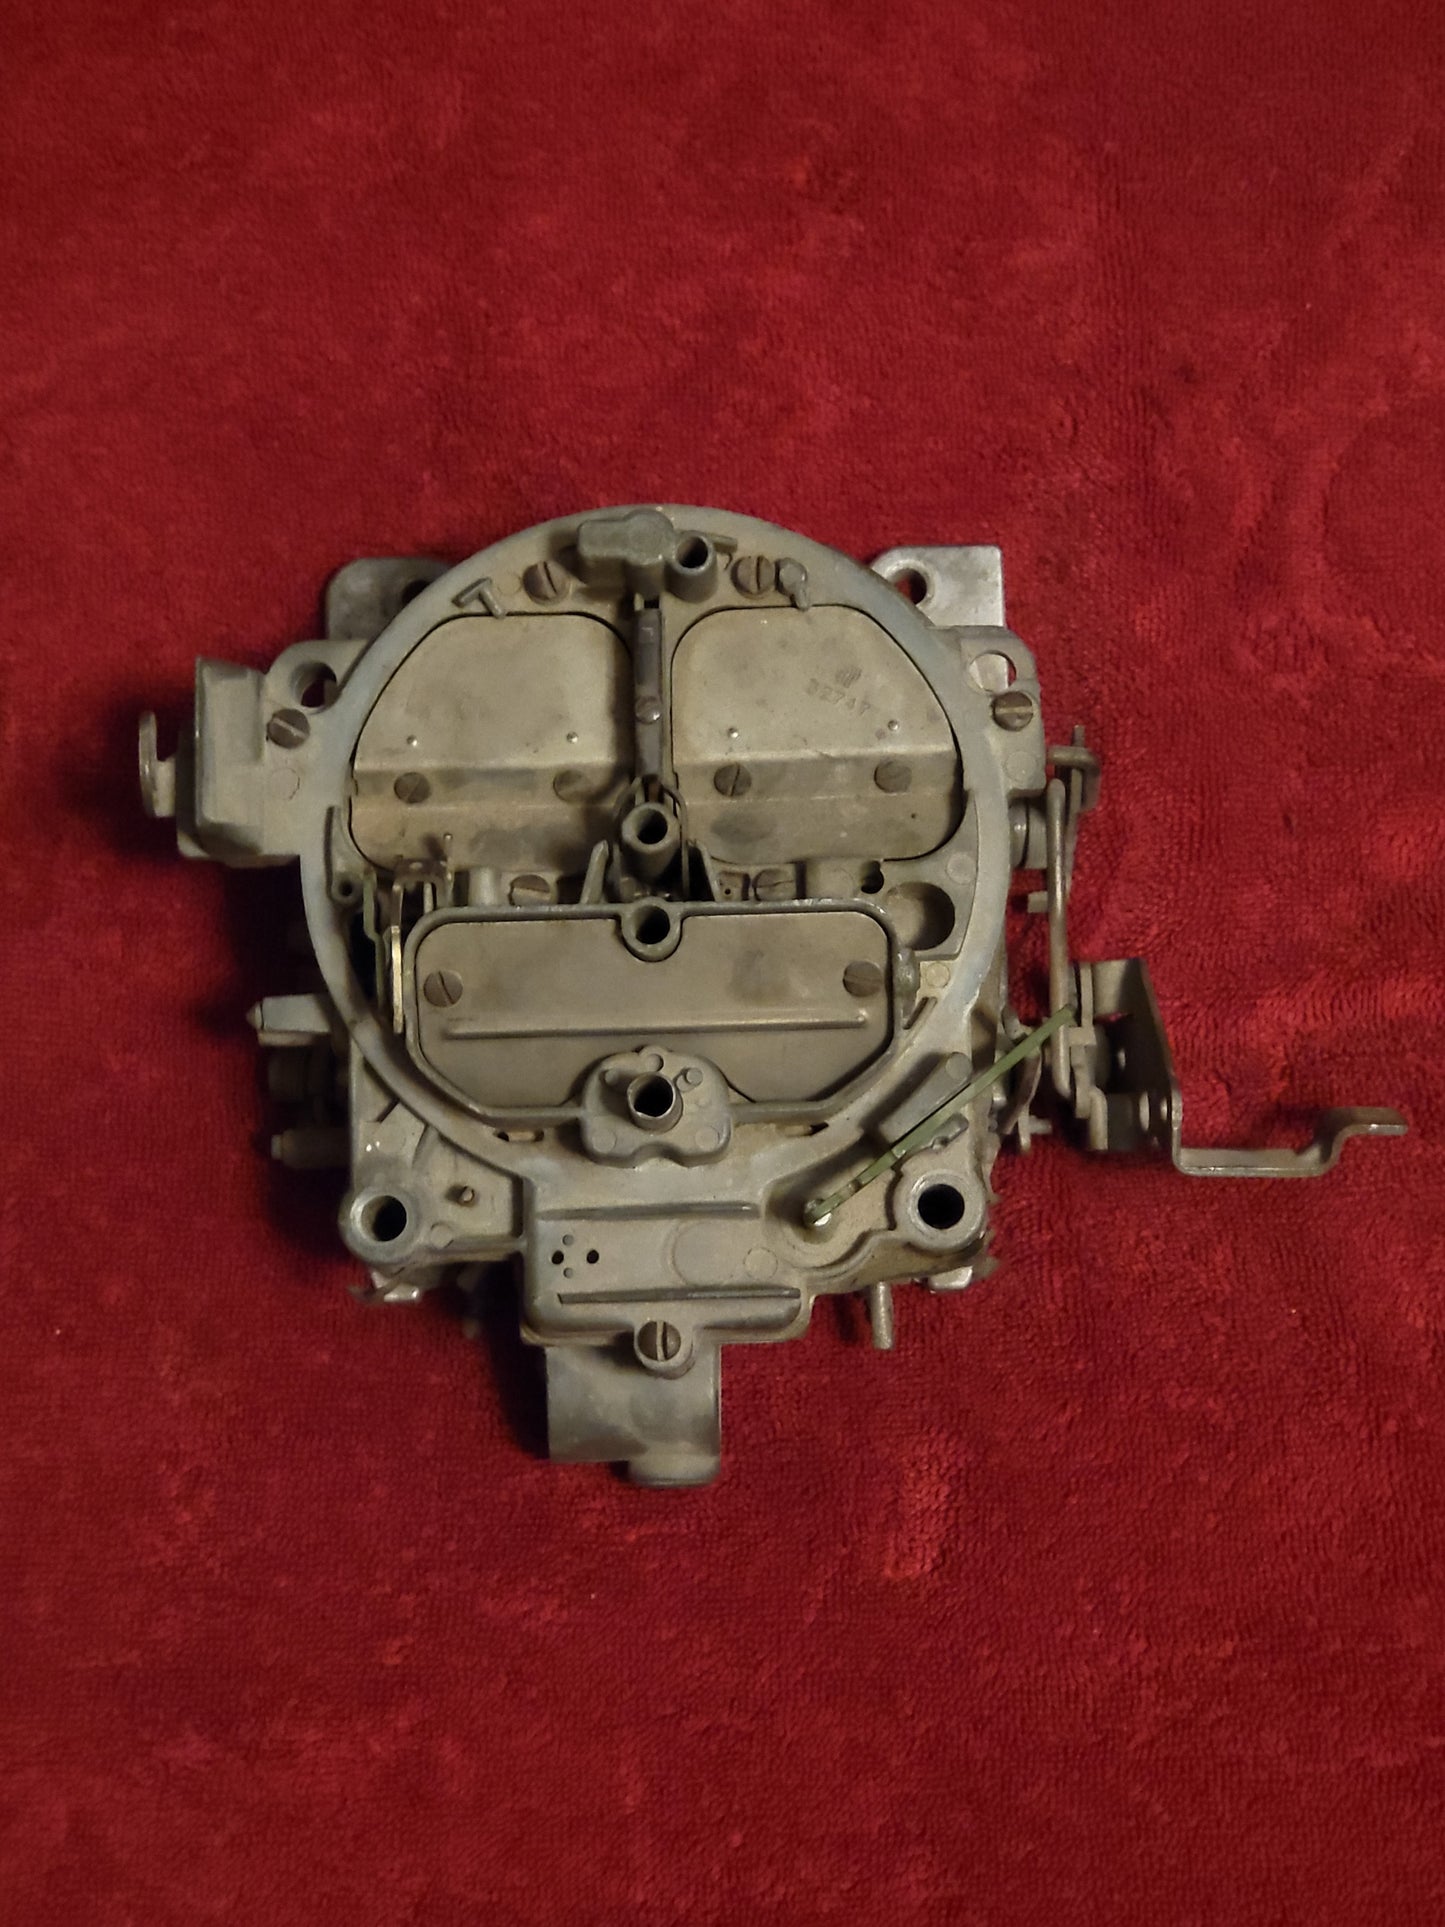 1968 1969 Cadillac Carburetor Rochester 4MV 7029232 472CI Needs Rebuild Core